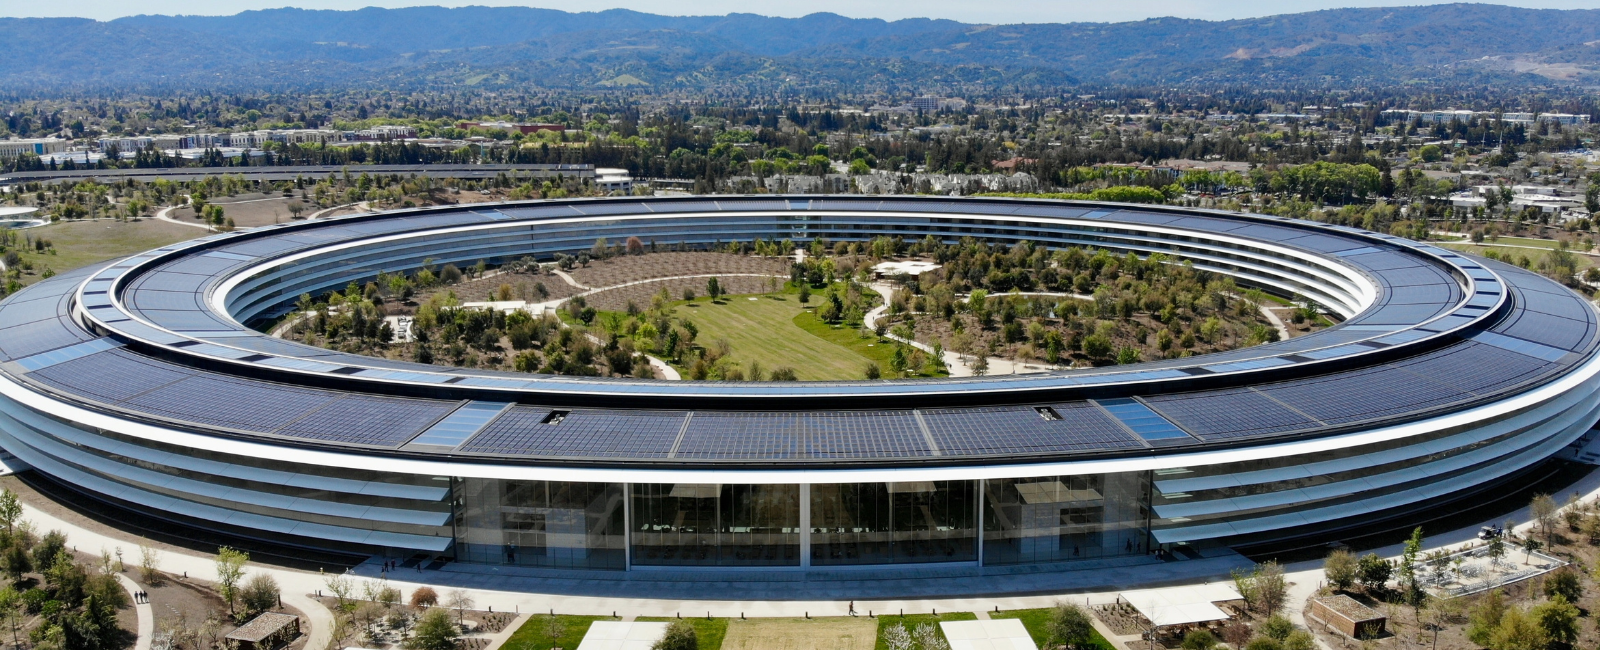 Silicon Valley Apple headquarters